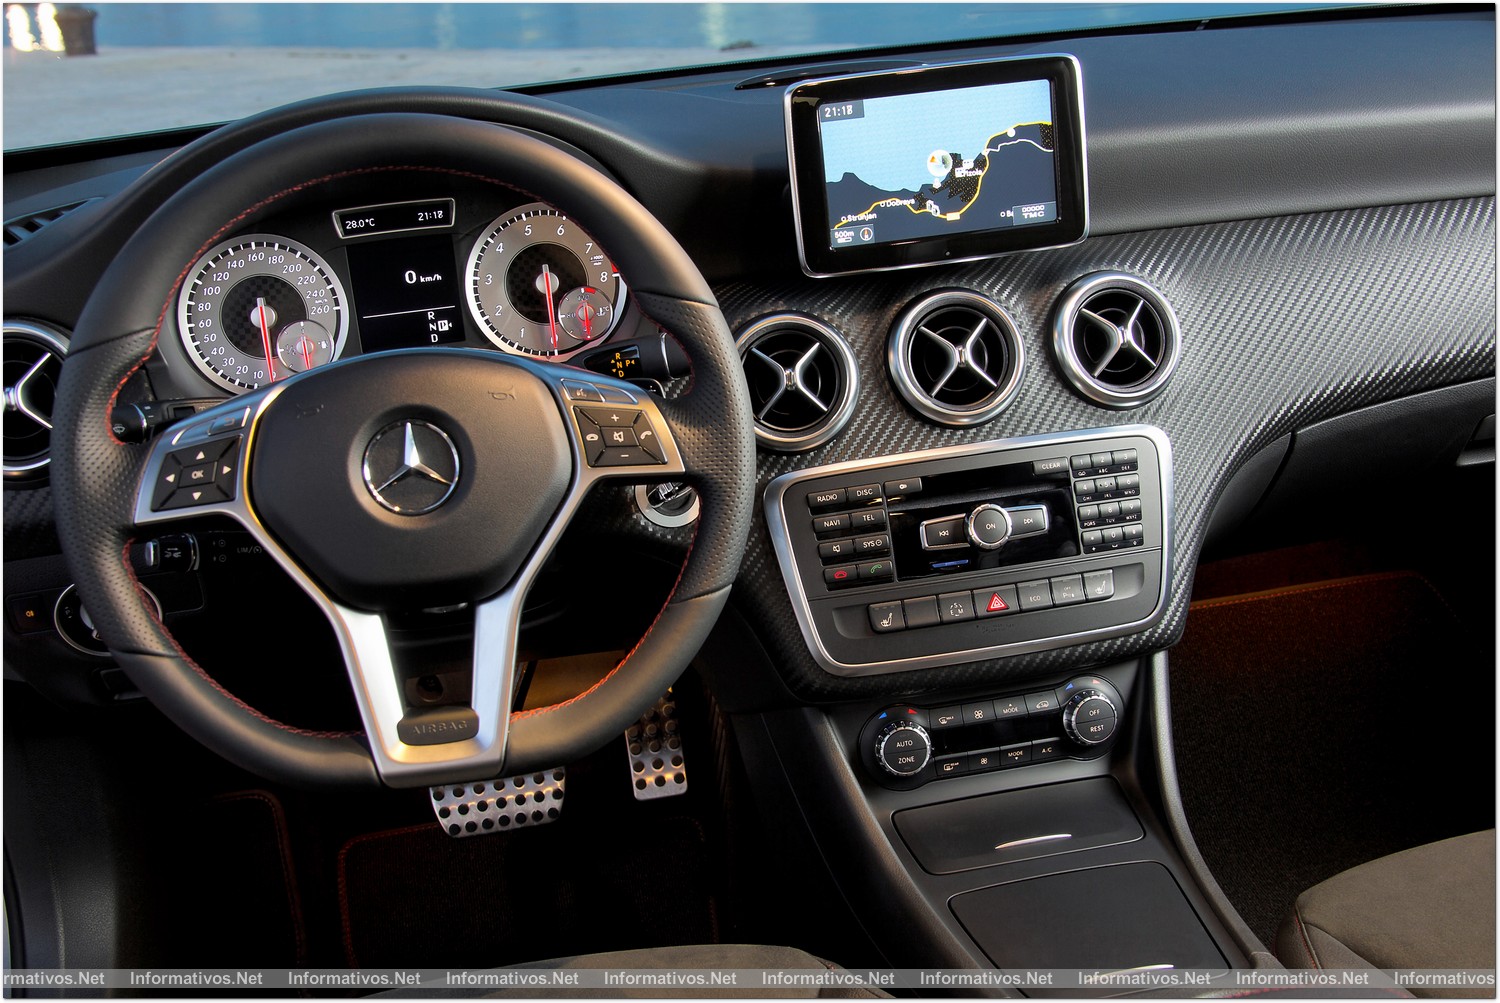 Mercedes-Benz A-Class, A 200, interior